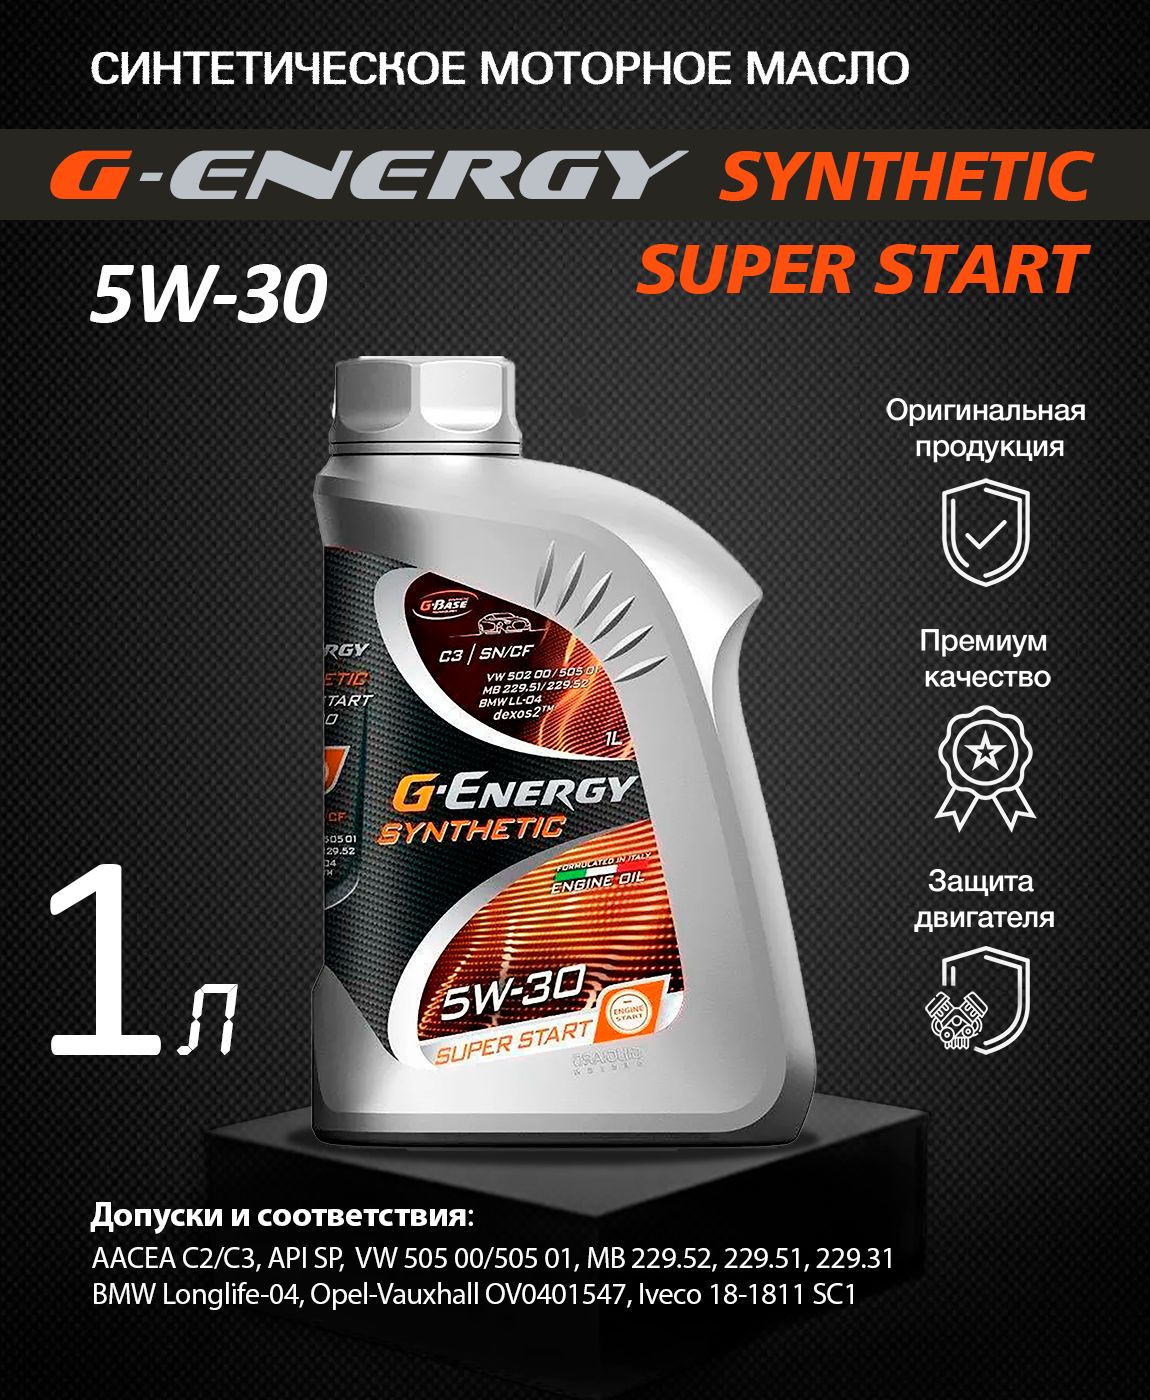 Характеристики масла g energy. G Energy 5w40 Актив. G-Energy Synthetic Active 5w-30. G-Energy Synthetic Active 5w-40. Масло g-Energy Synthetic super start 5w-30.